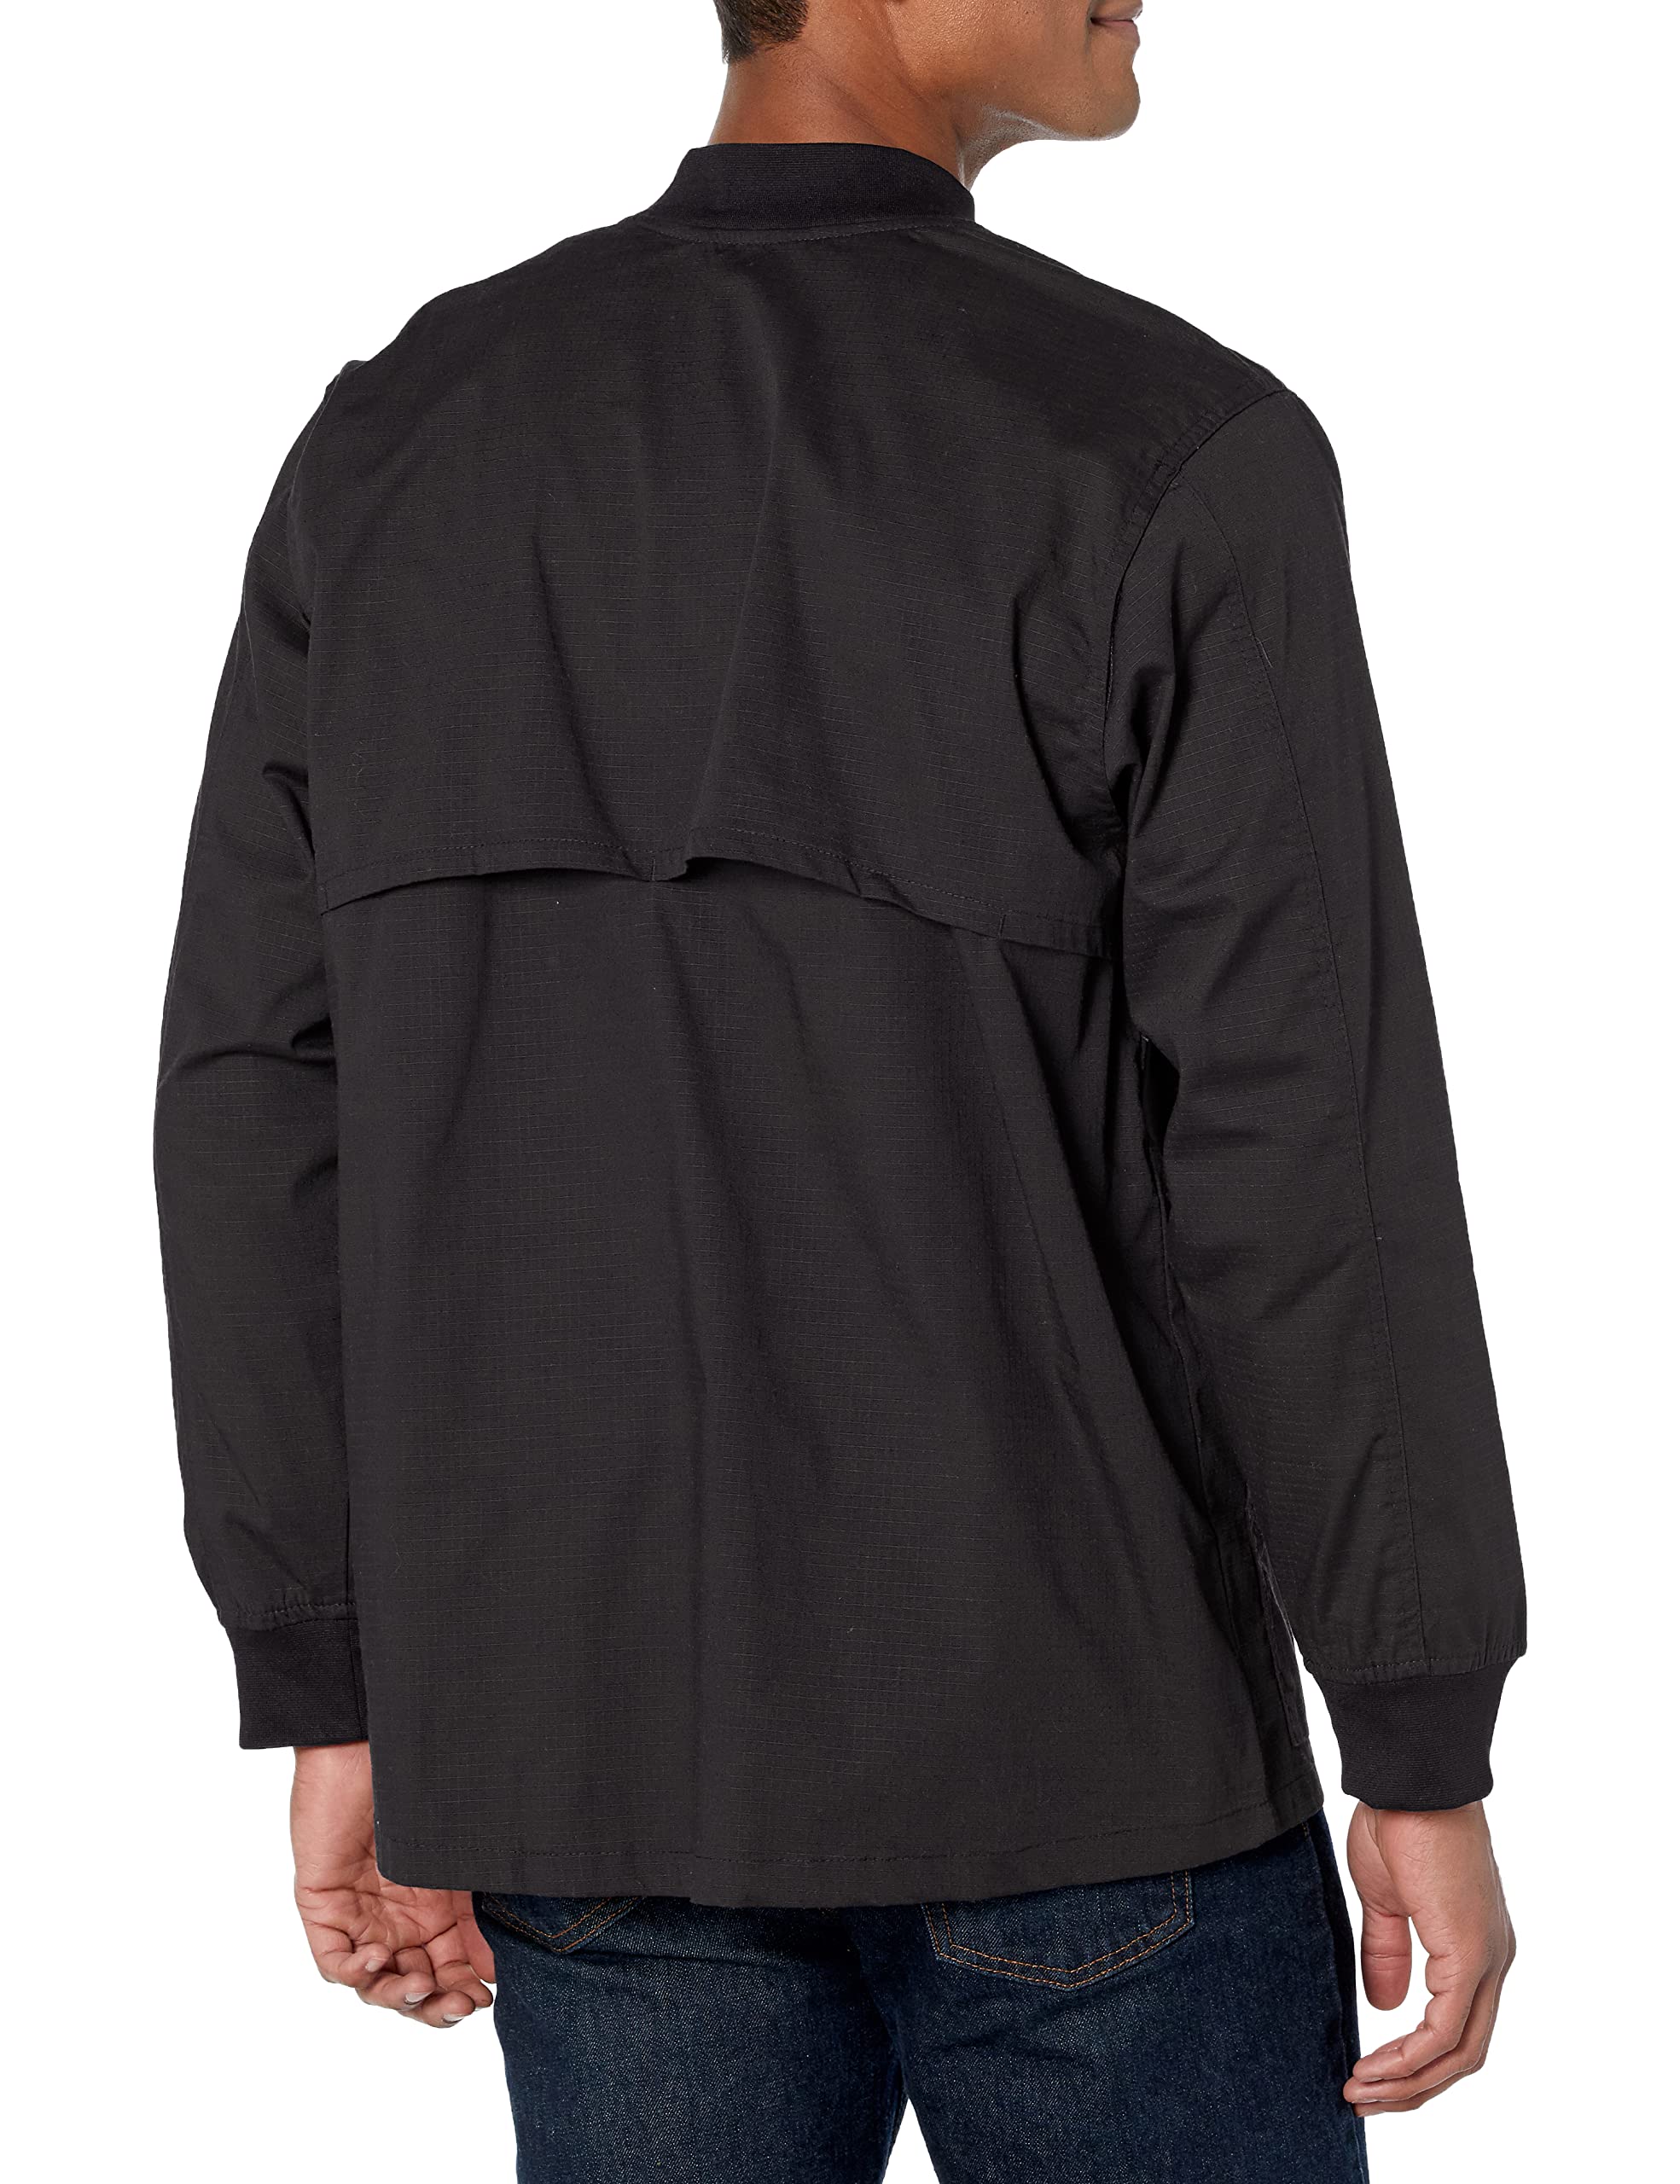 Carhartt Men's Utility Warm-up Jacket